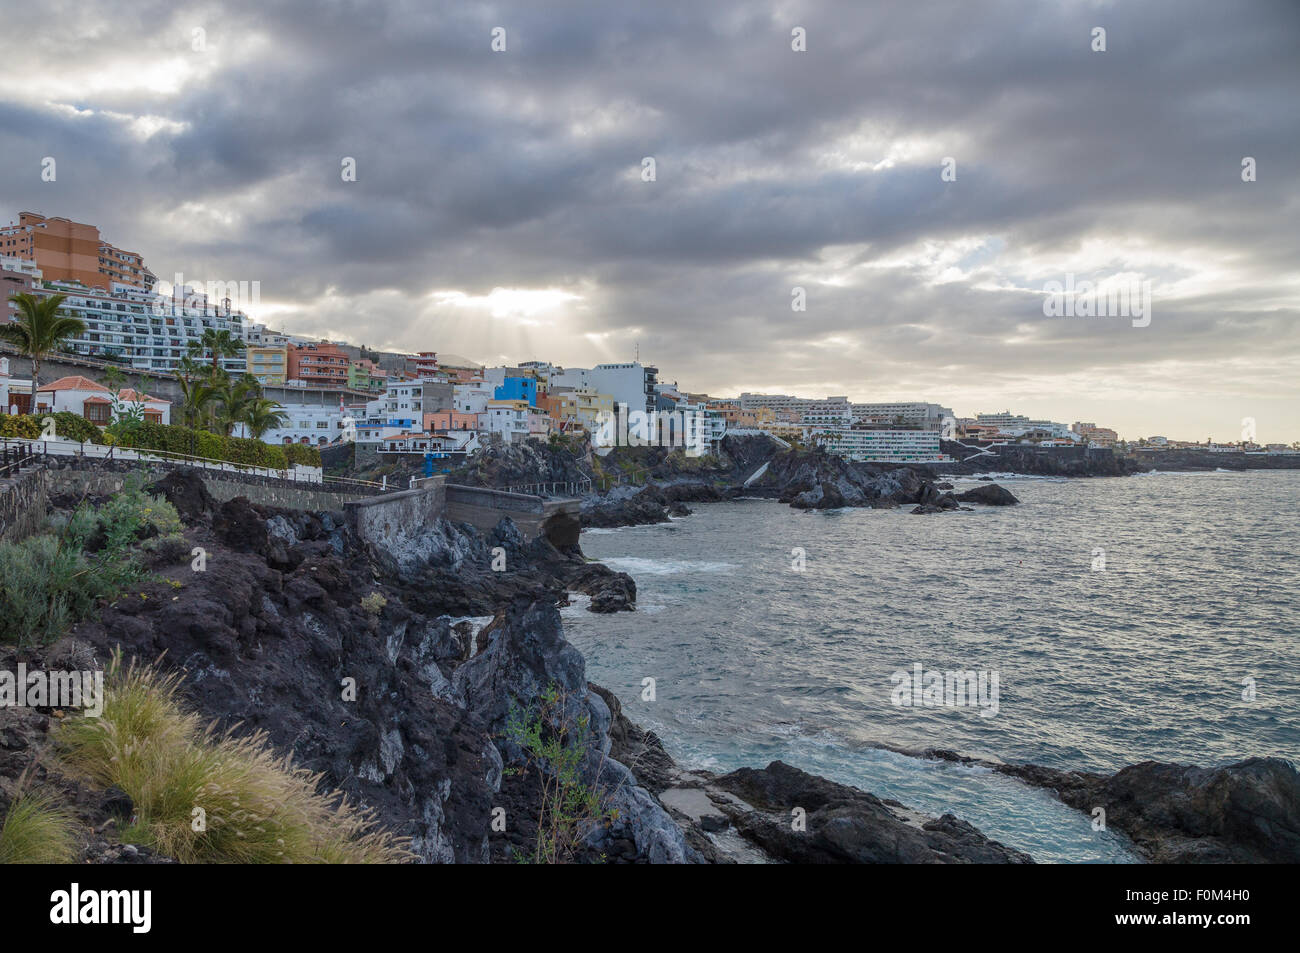 Cloudy weather in coastal resort town Puerto de Santiago, Tenerife, Canary Islands, Spain Stock Photo